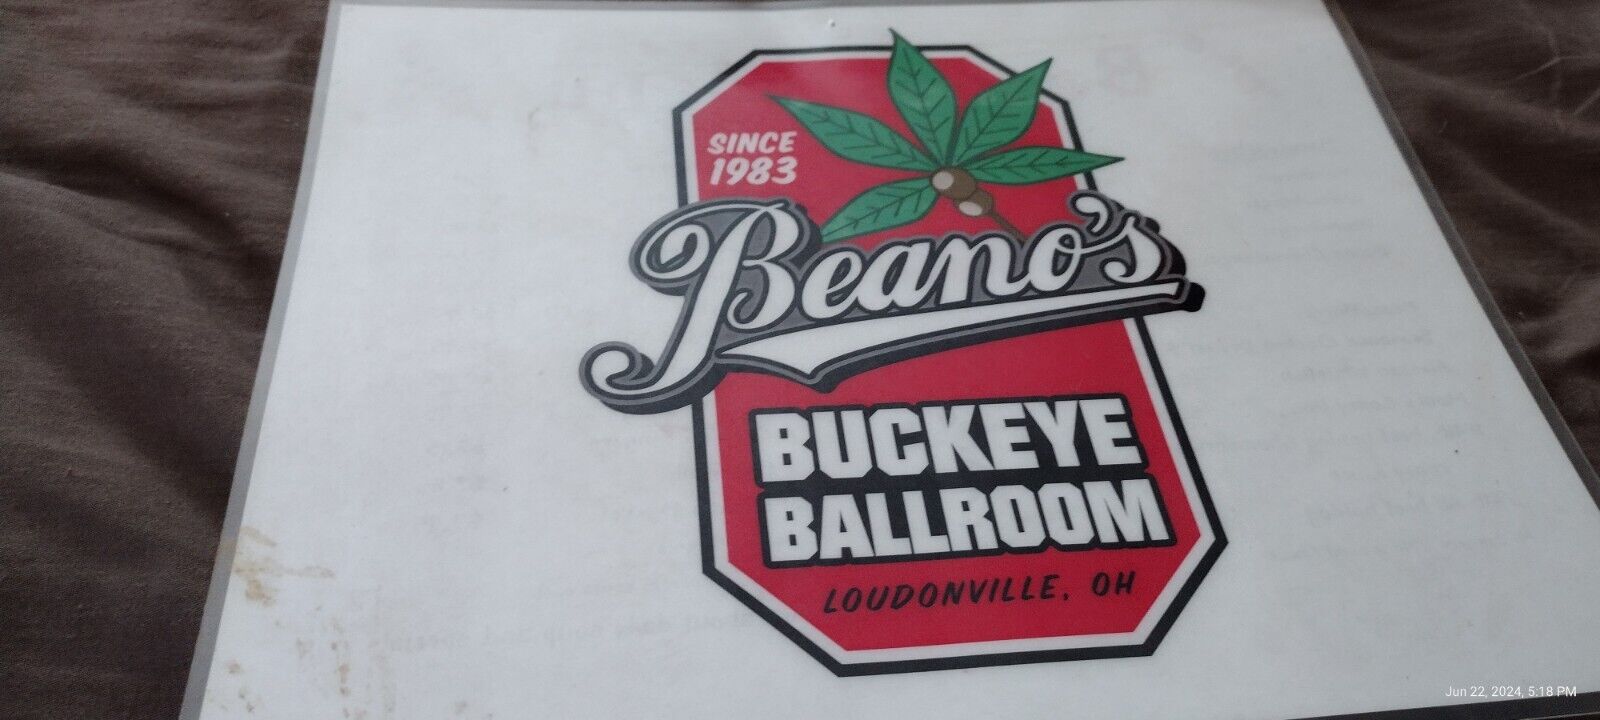 Vintage Beano's Buckeye Ballroom Restaurant Menu